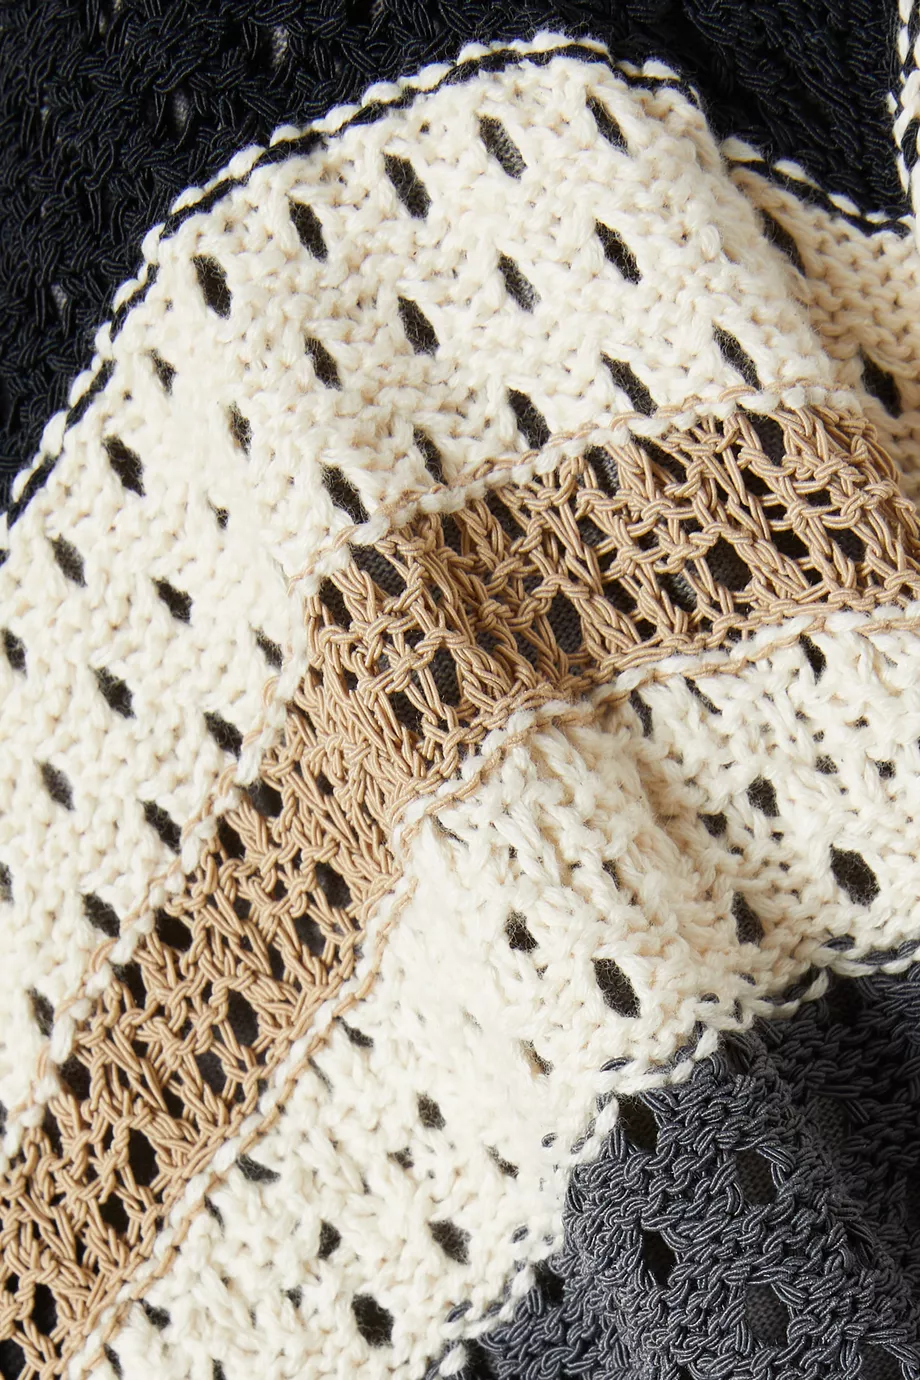 Buy Kith Black Thompson Crochet Buttondown in Cotton for Men in